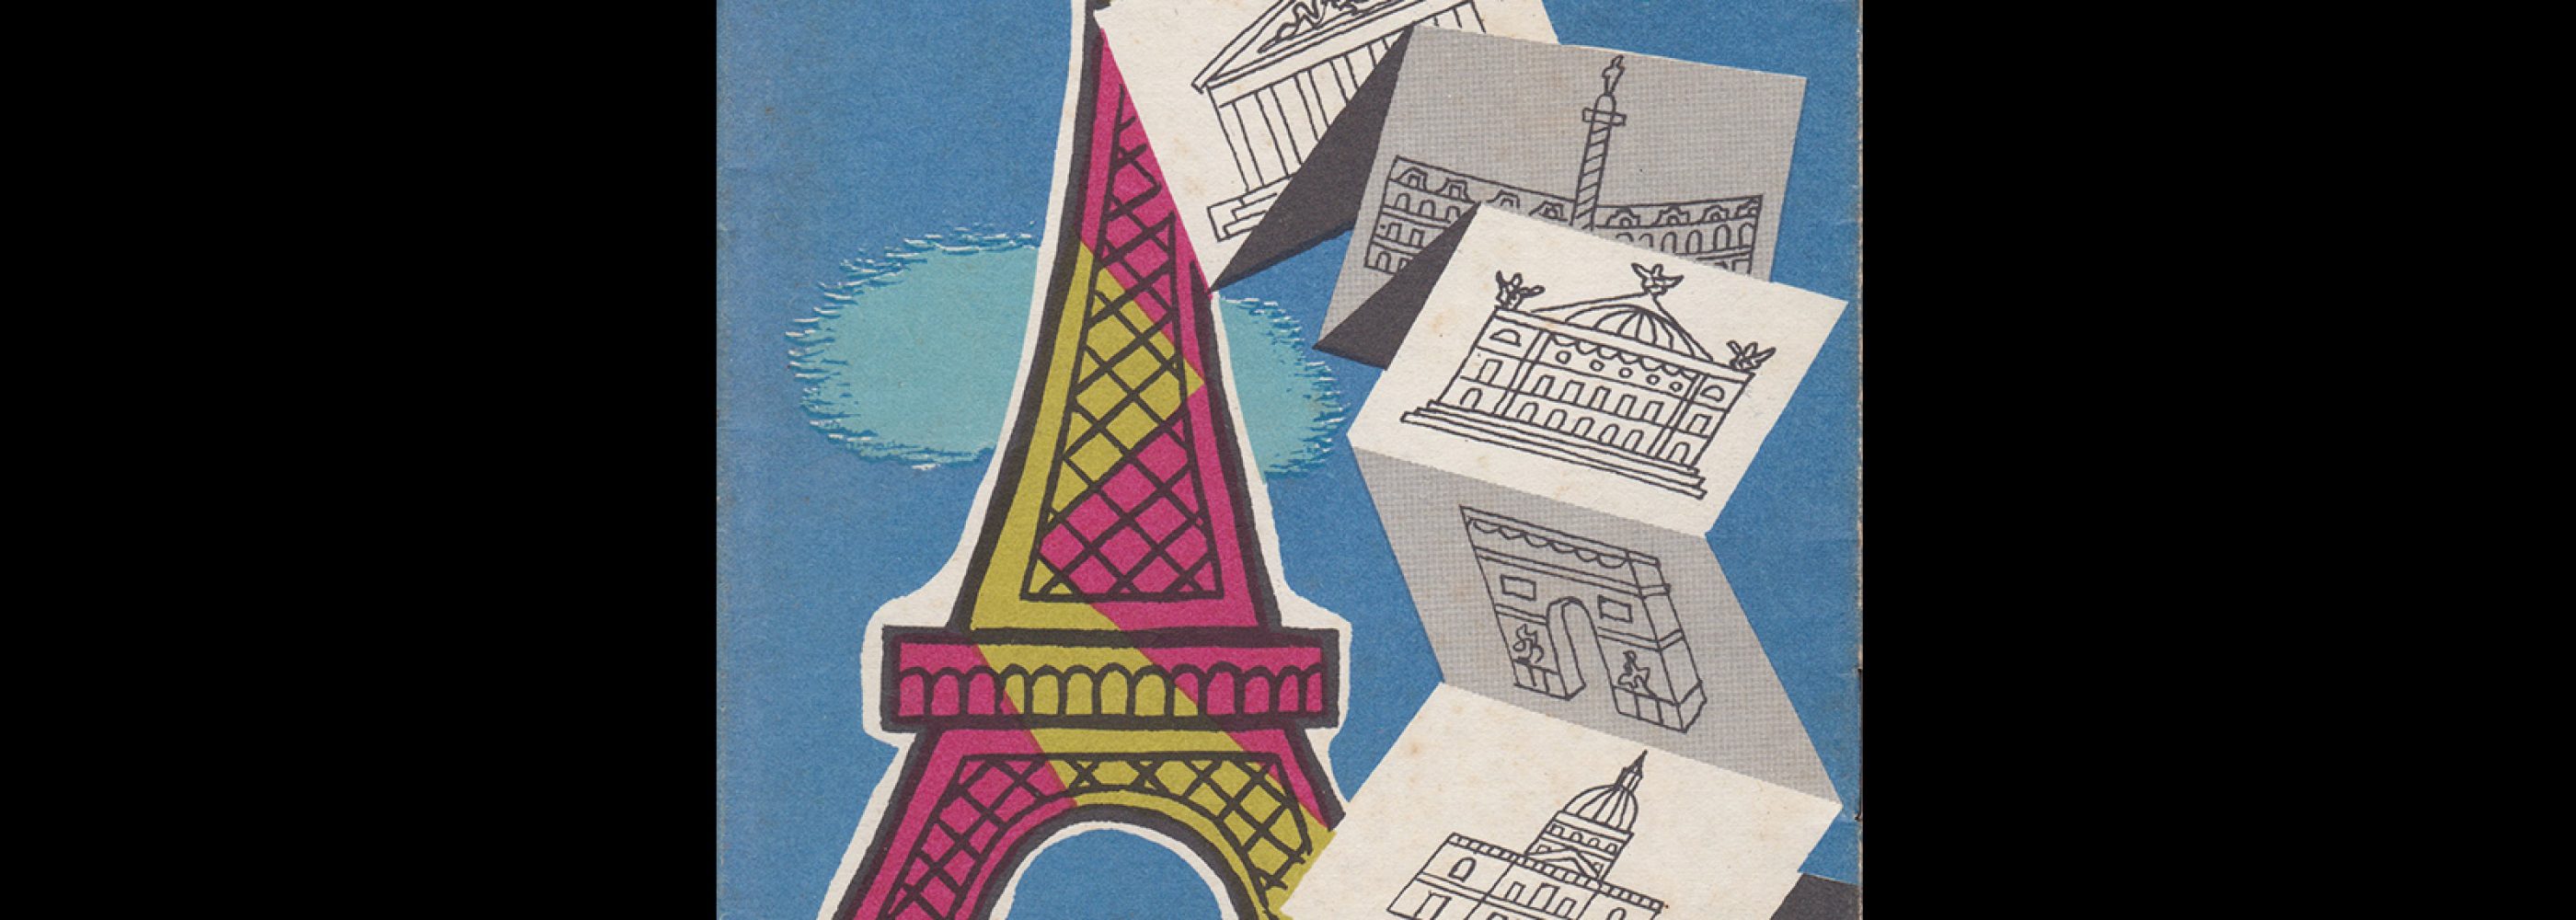 Paris Travel Brochure, 1969. Illustrated by Guy Georget.